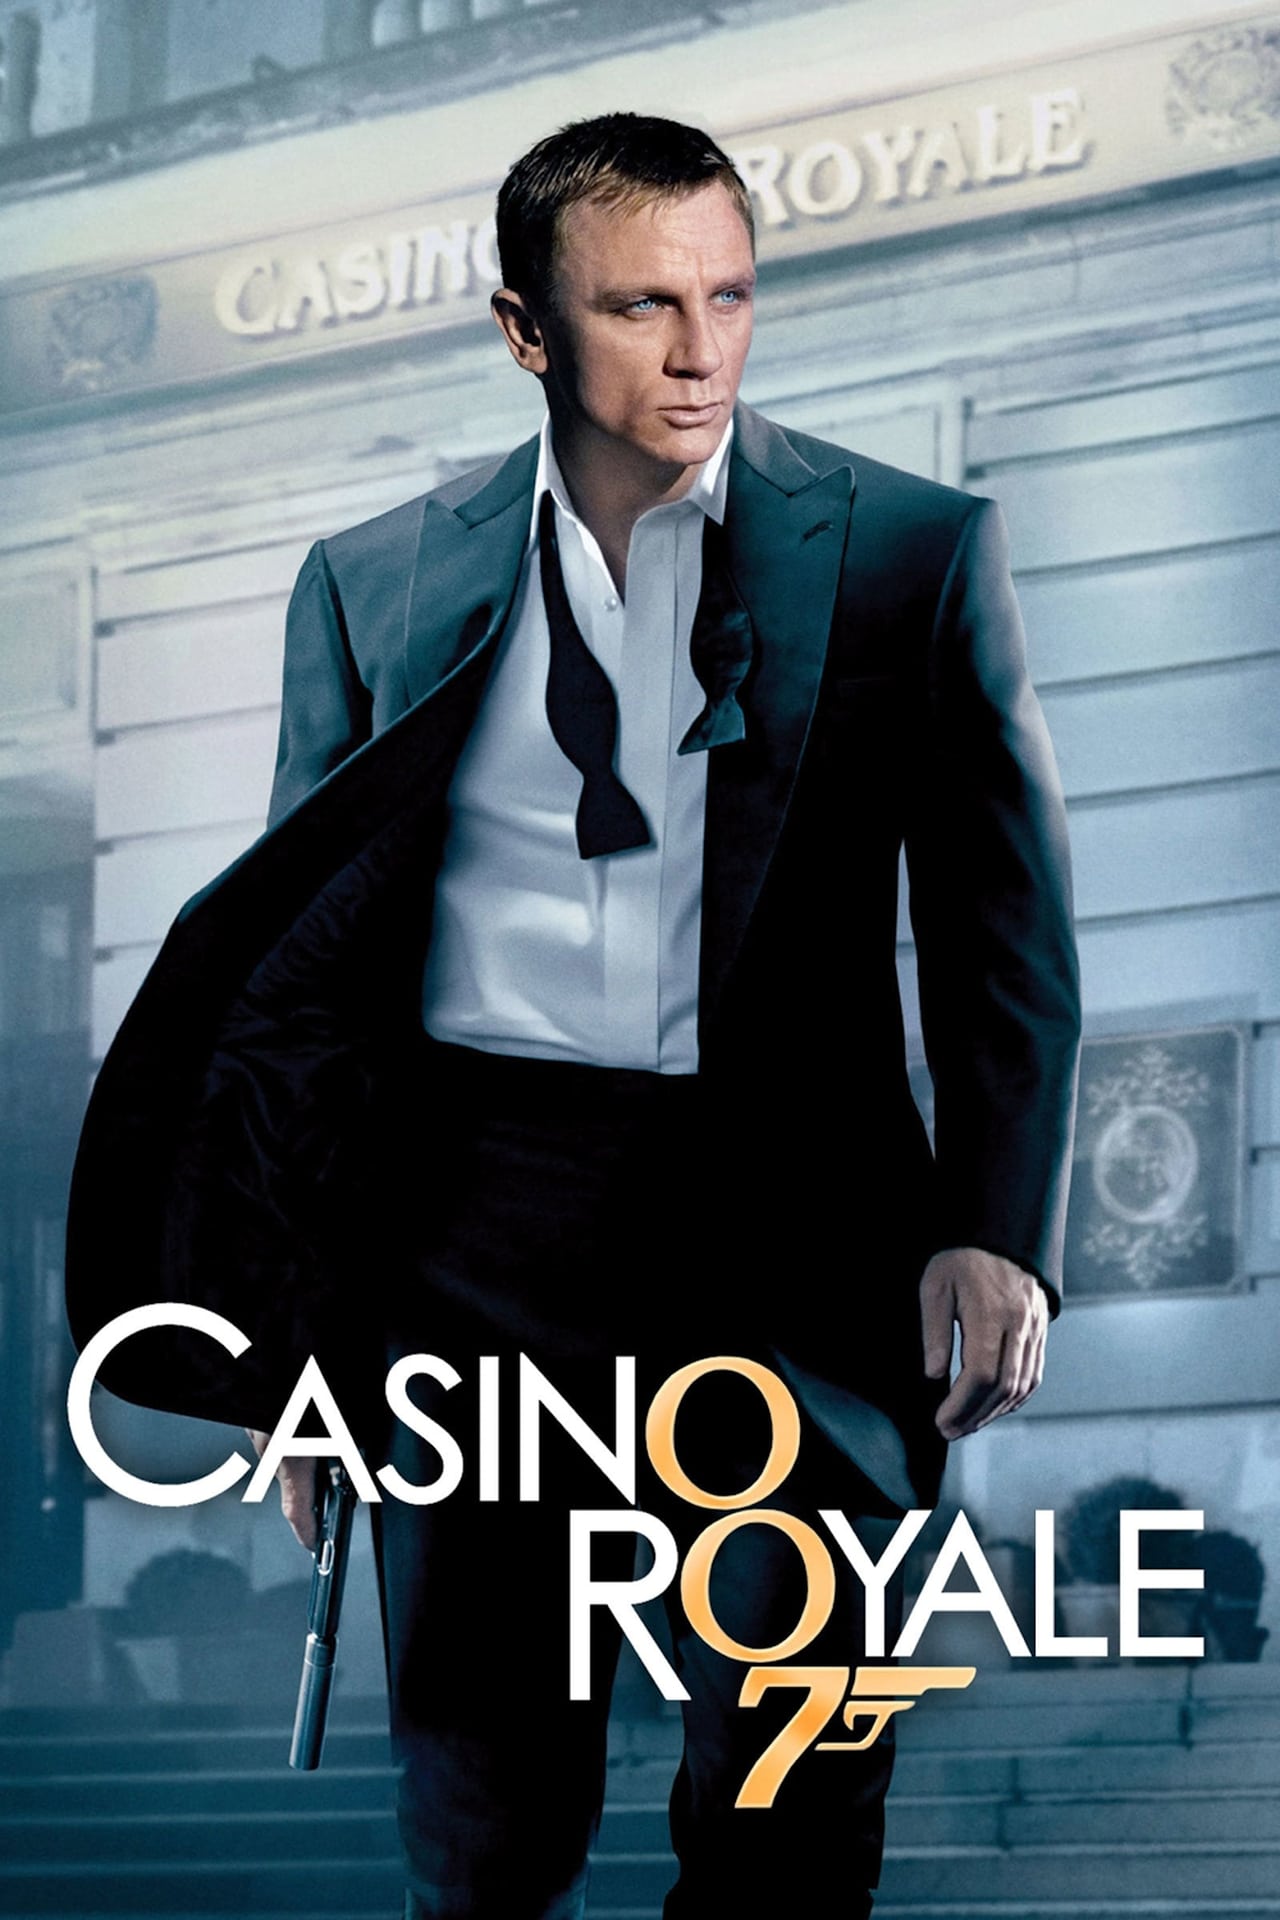 reddit movie streaming casino royale